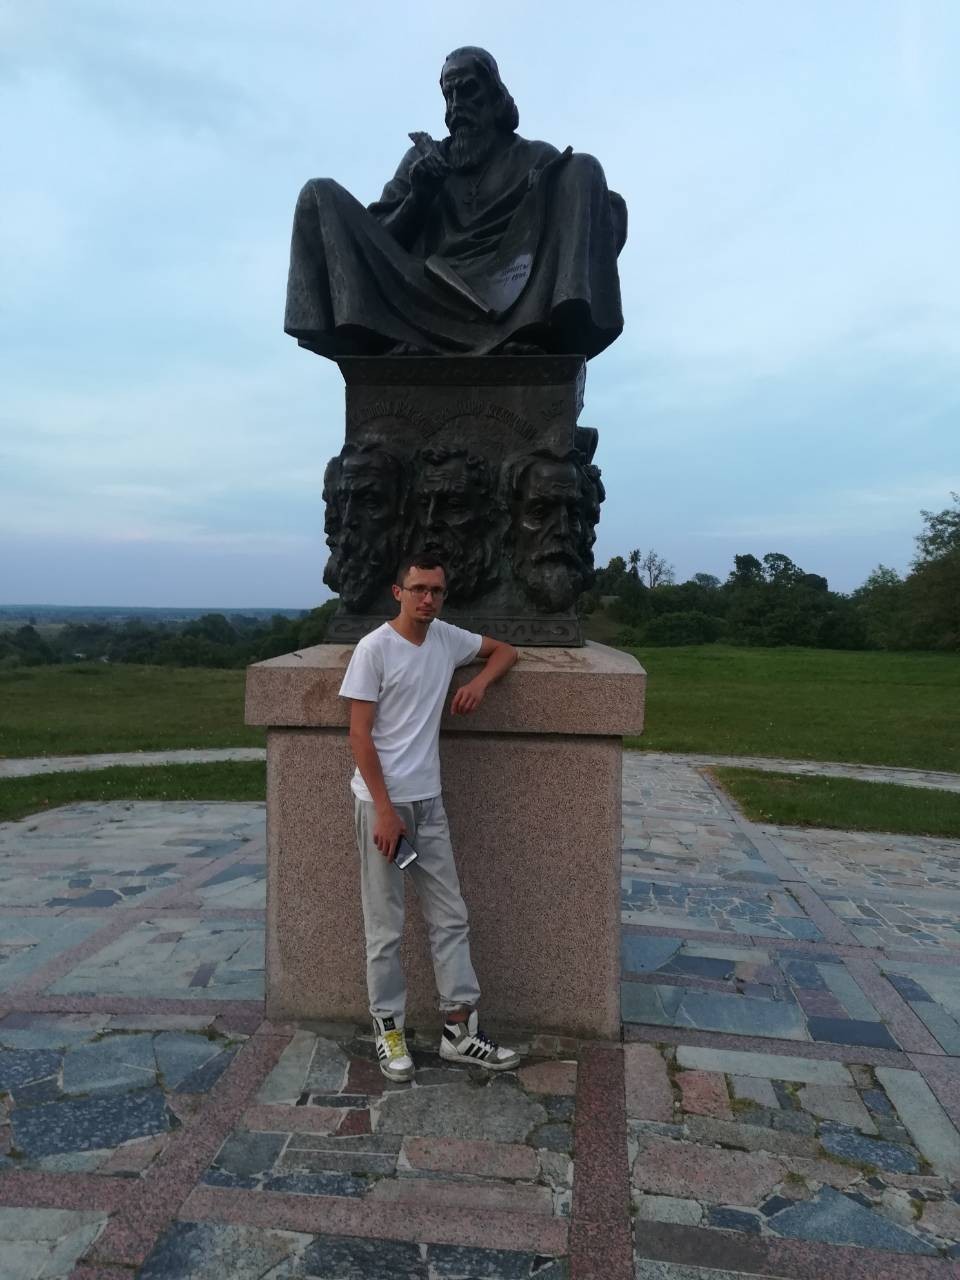 Памятник Любечскому съезду князей, Украина